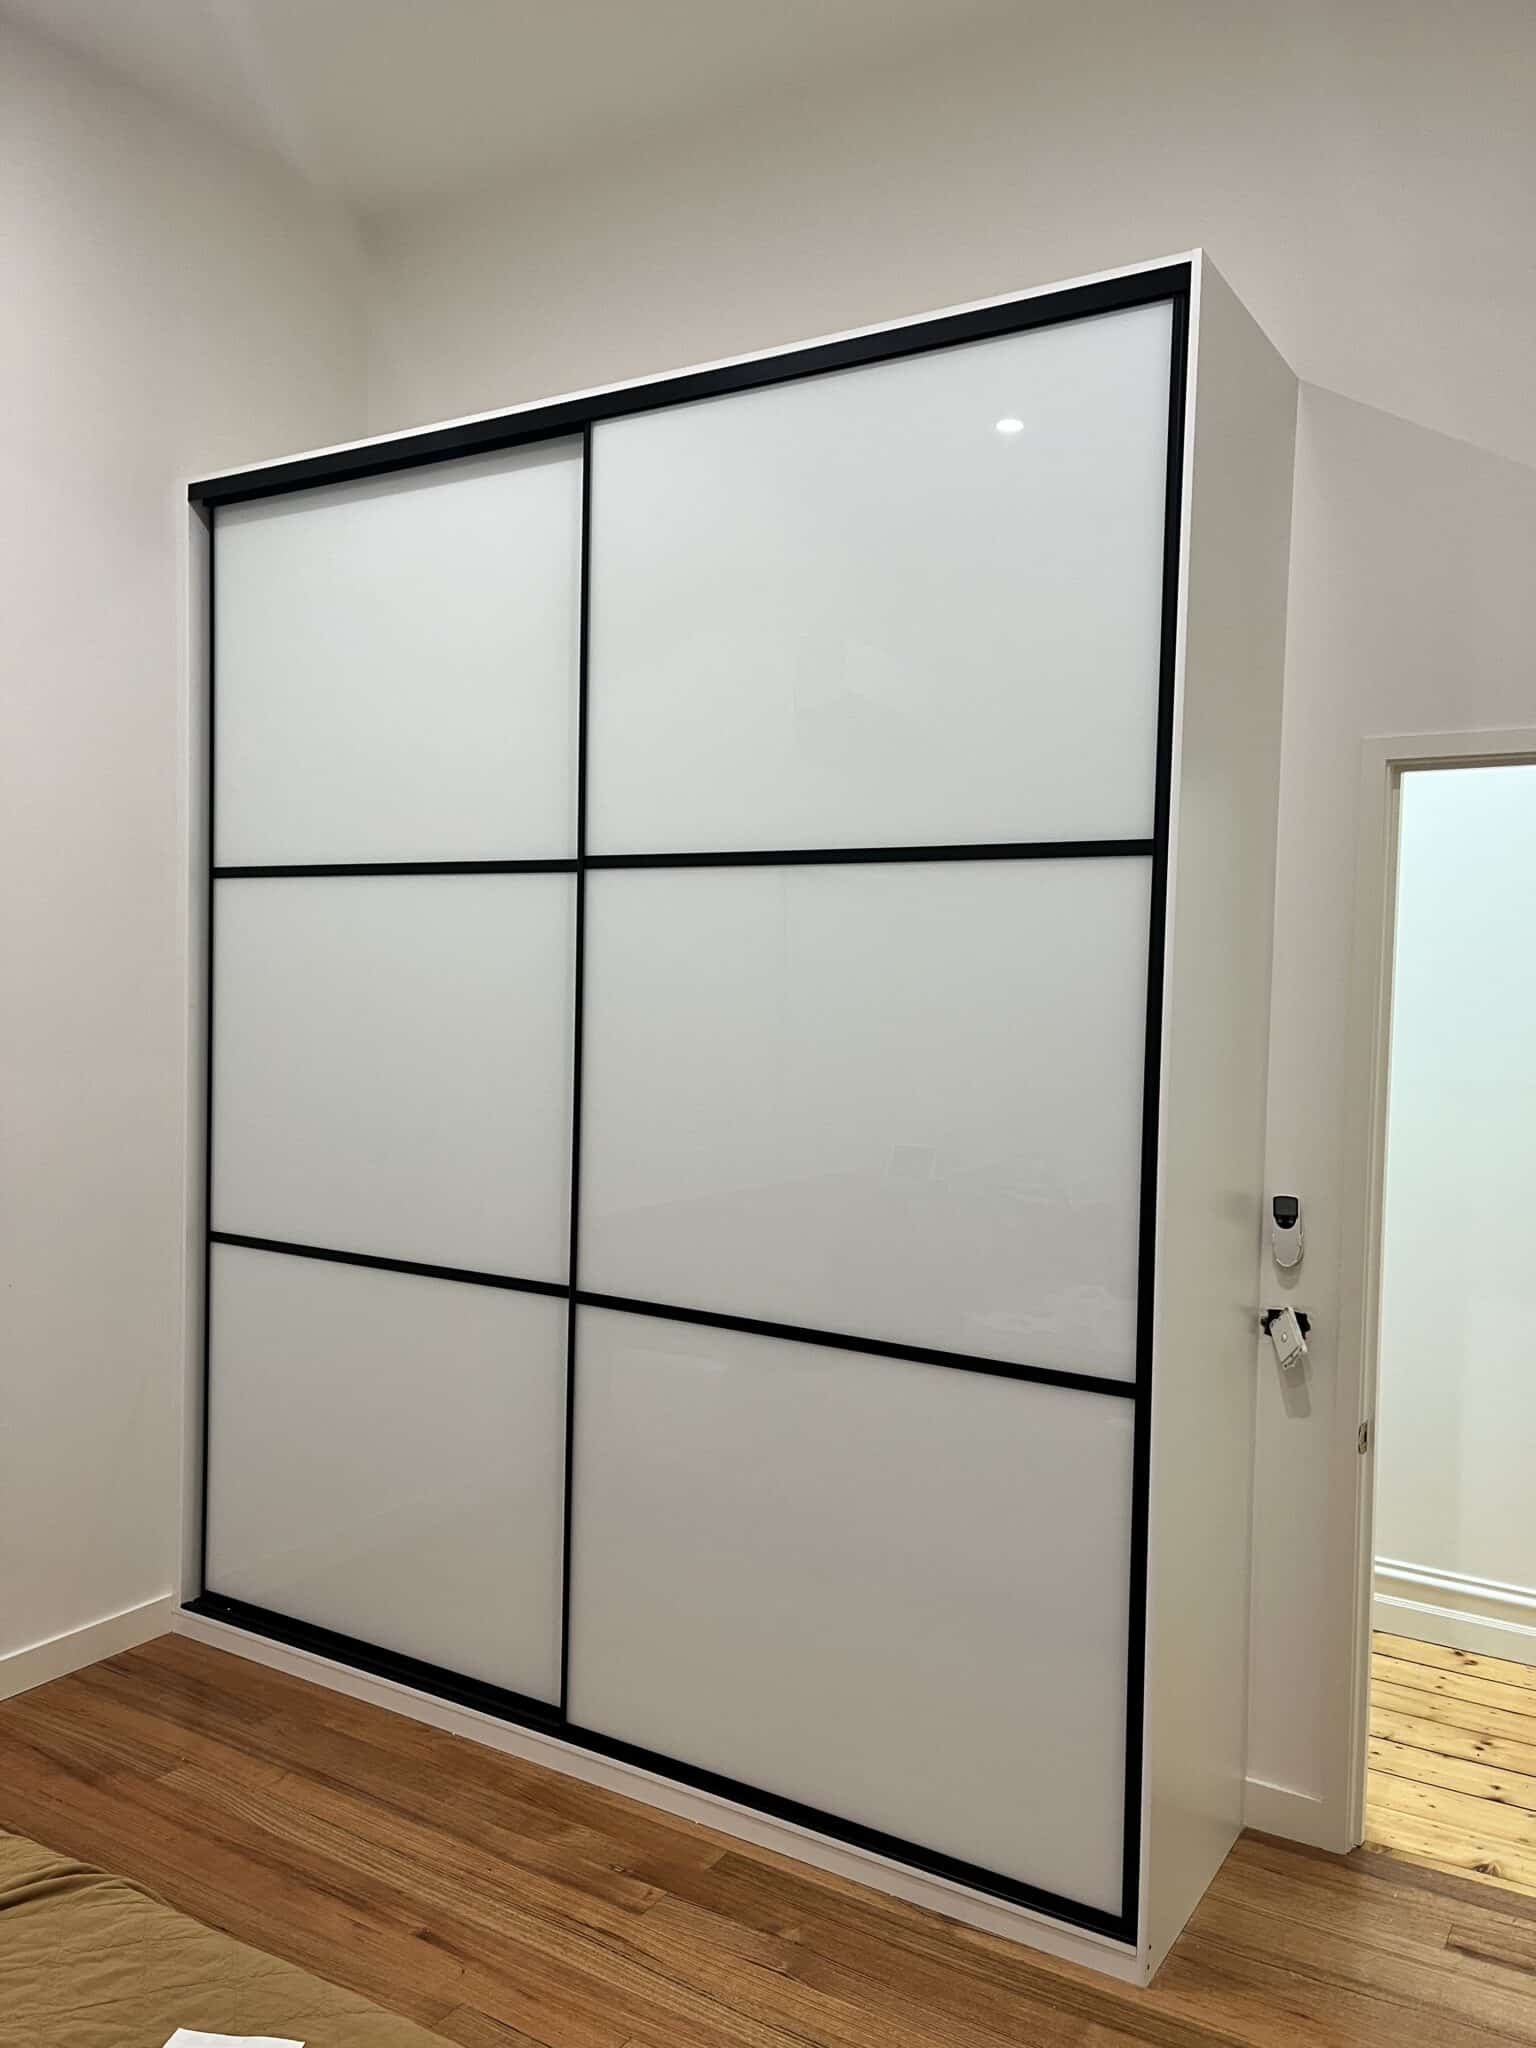 panelled door wardrobe white glass panels with black frame 3 panel sliding door wardobe scaled